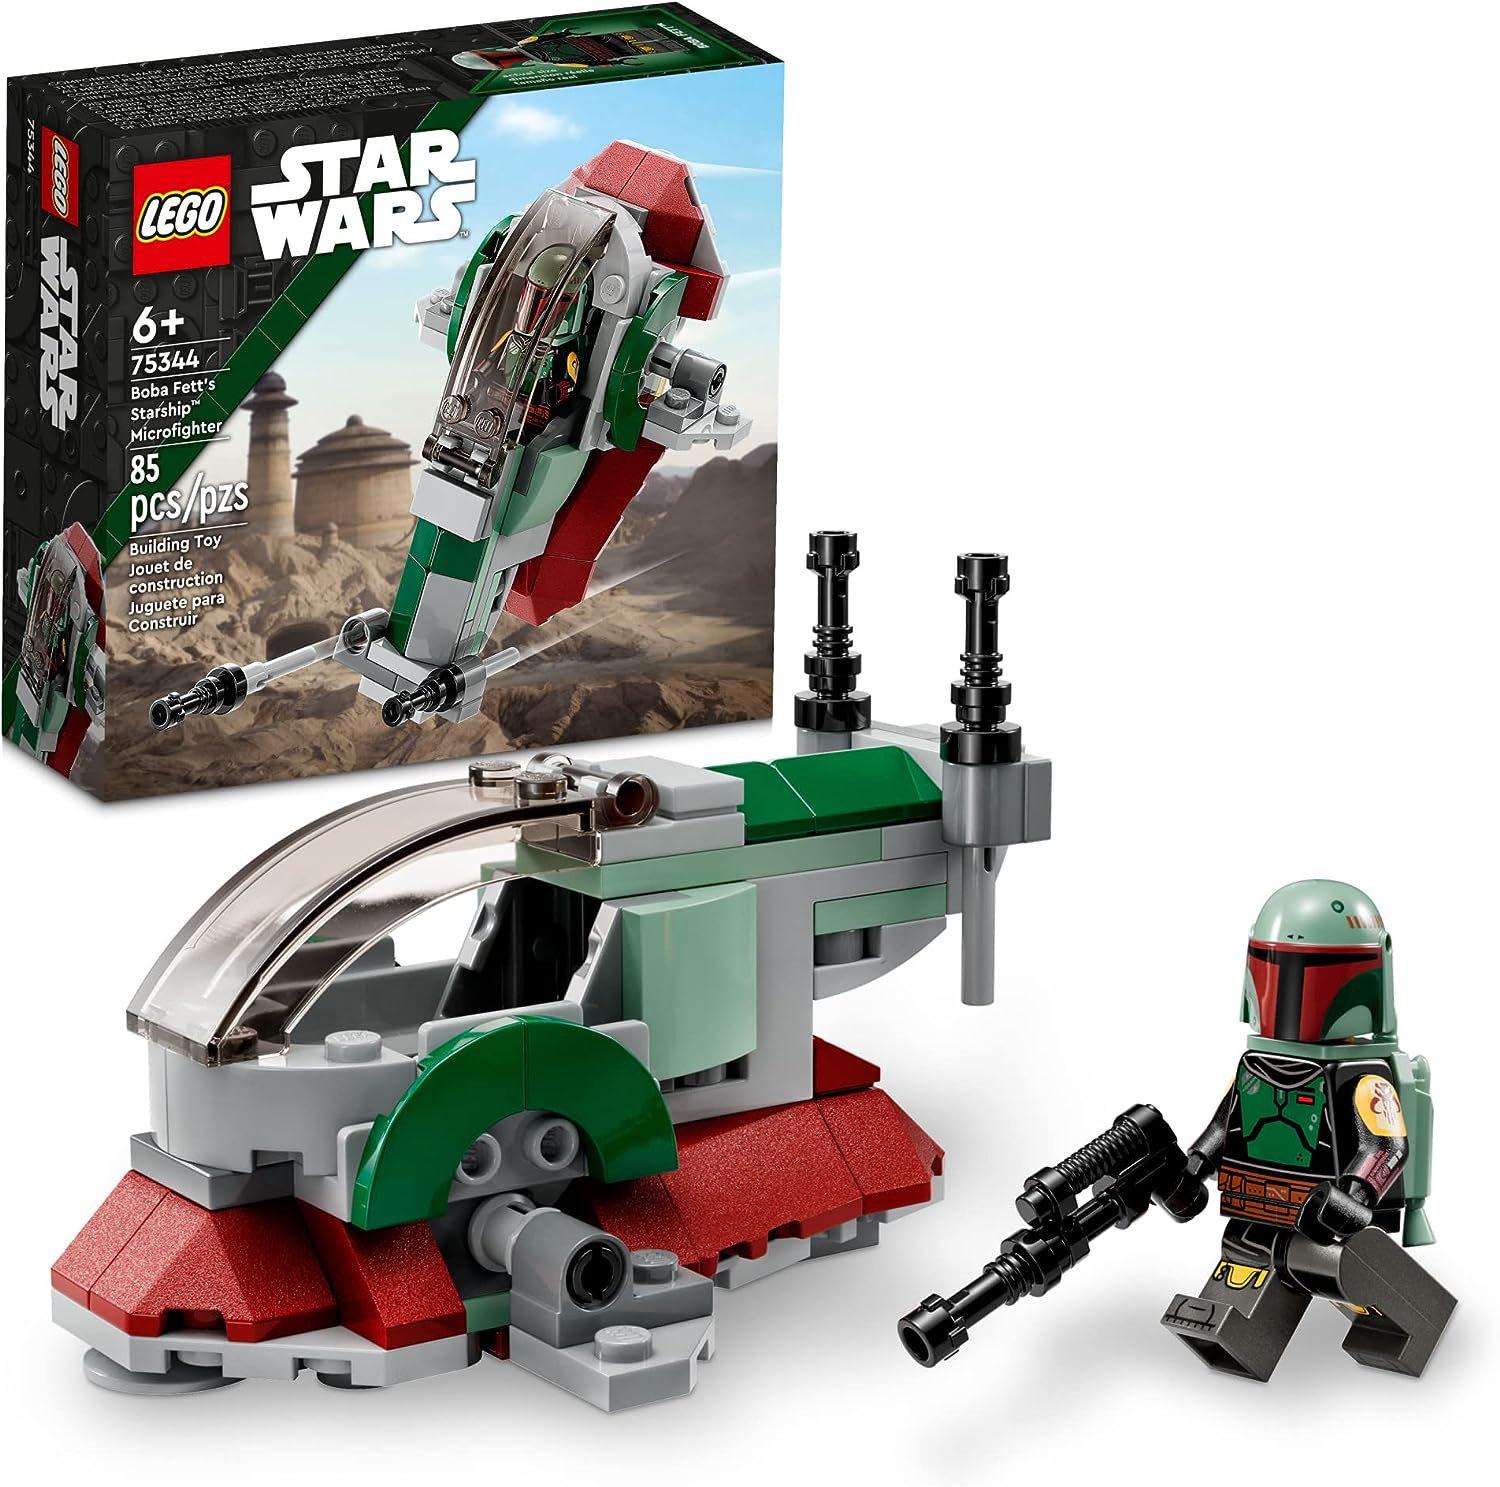 LEGO Boba Fett’s Starship Microfighter - JKA Toys